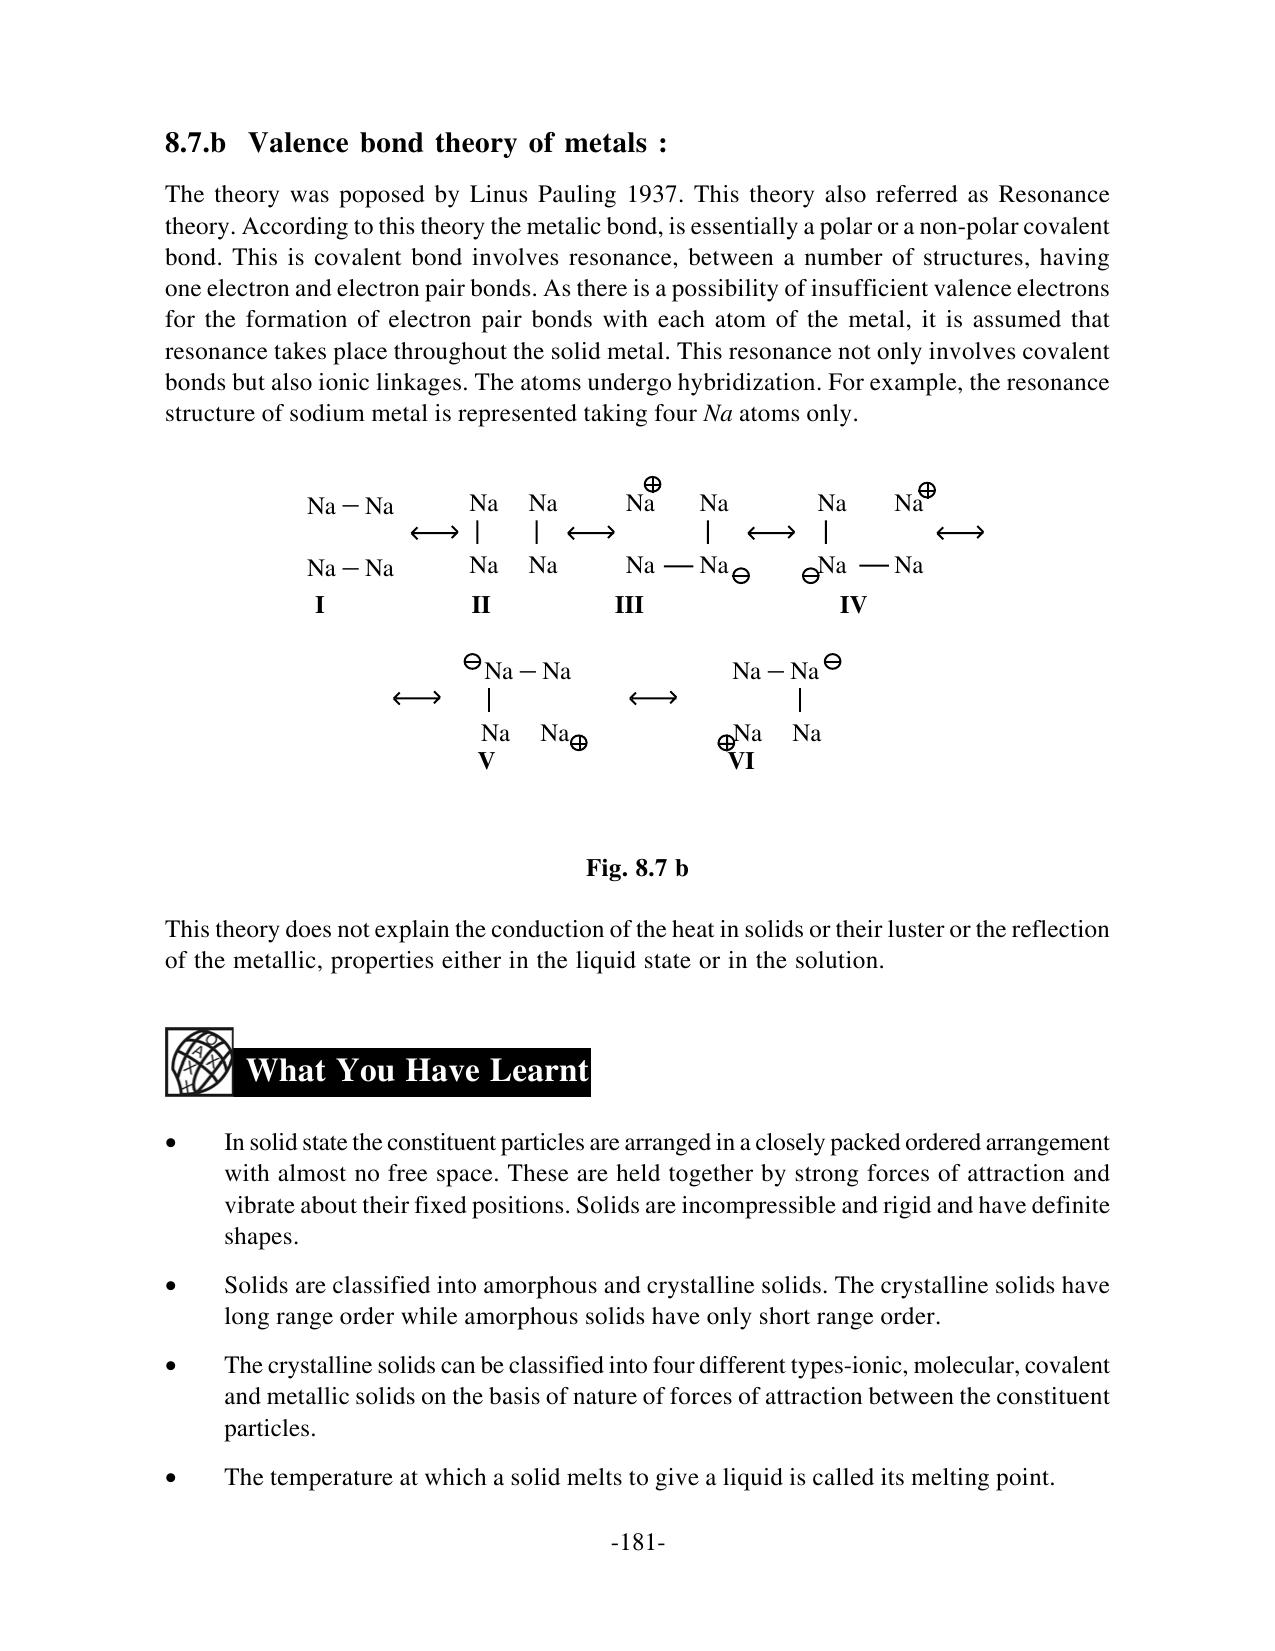 TS SCERT Inter 1st Year Chemistry Vol – I Path 1 (English Medium) Text Book - Page 190